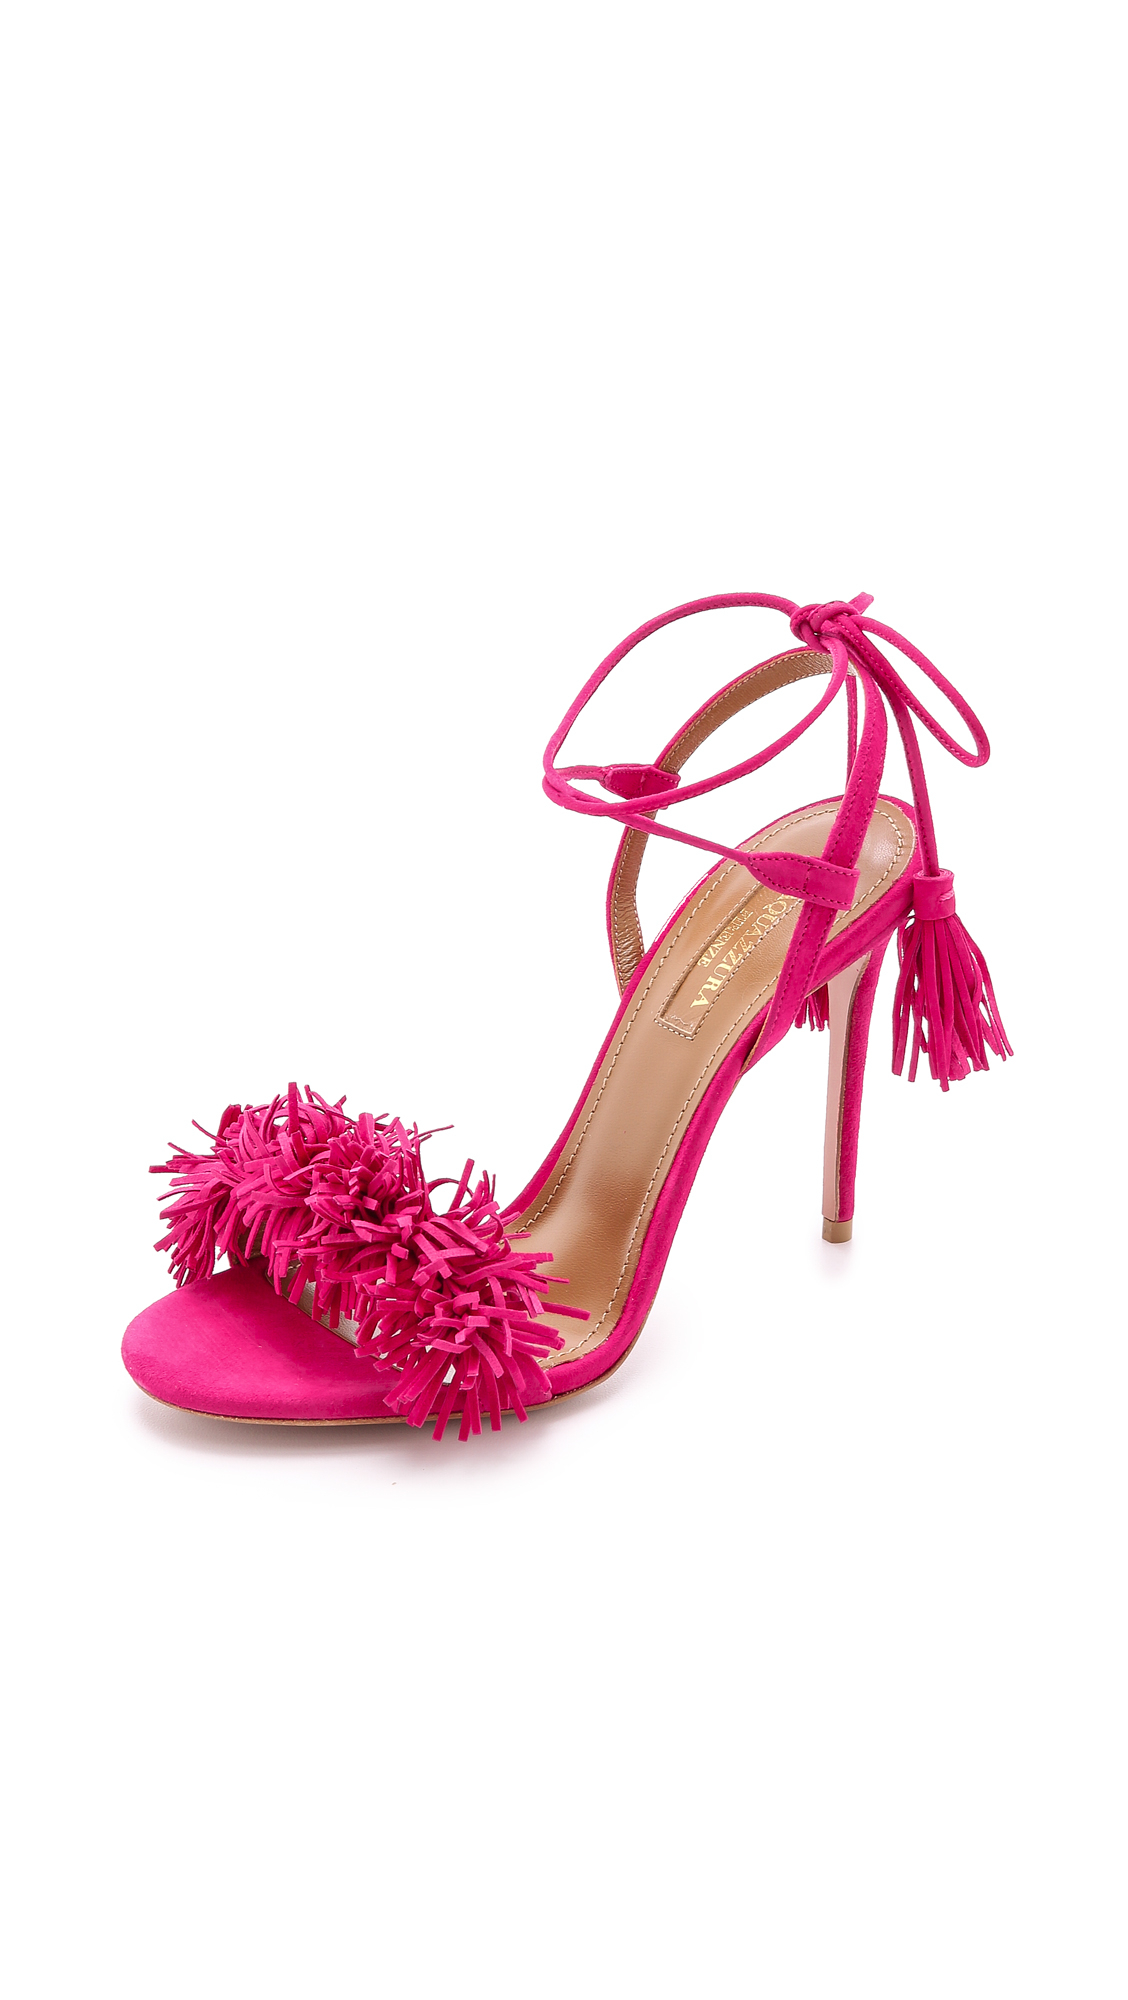 Aquazzura Wild Thing Fringe Sandals - Hot Pink | Lyst